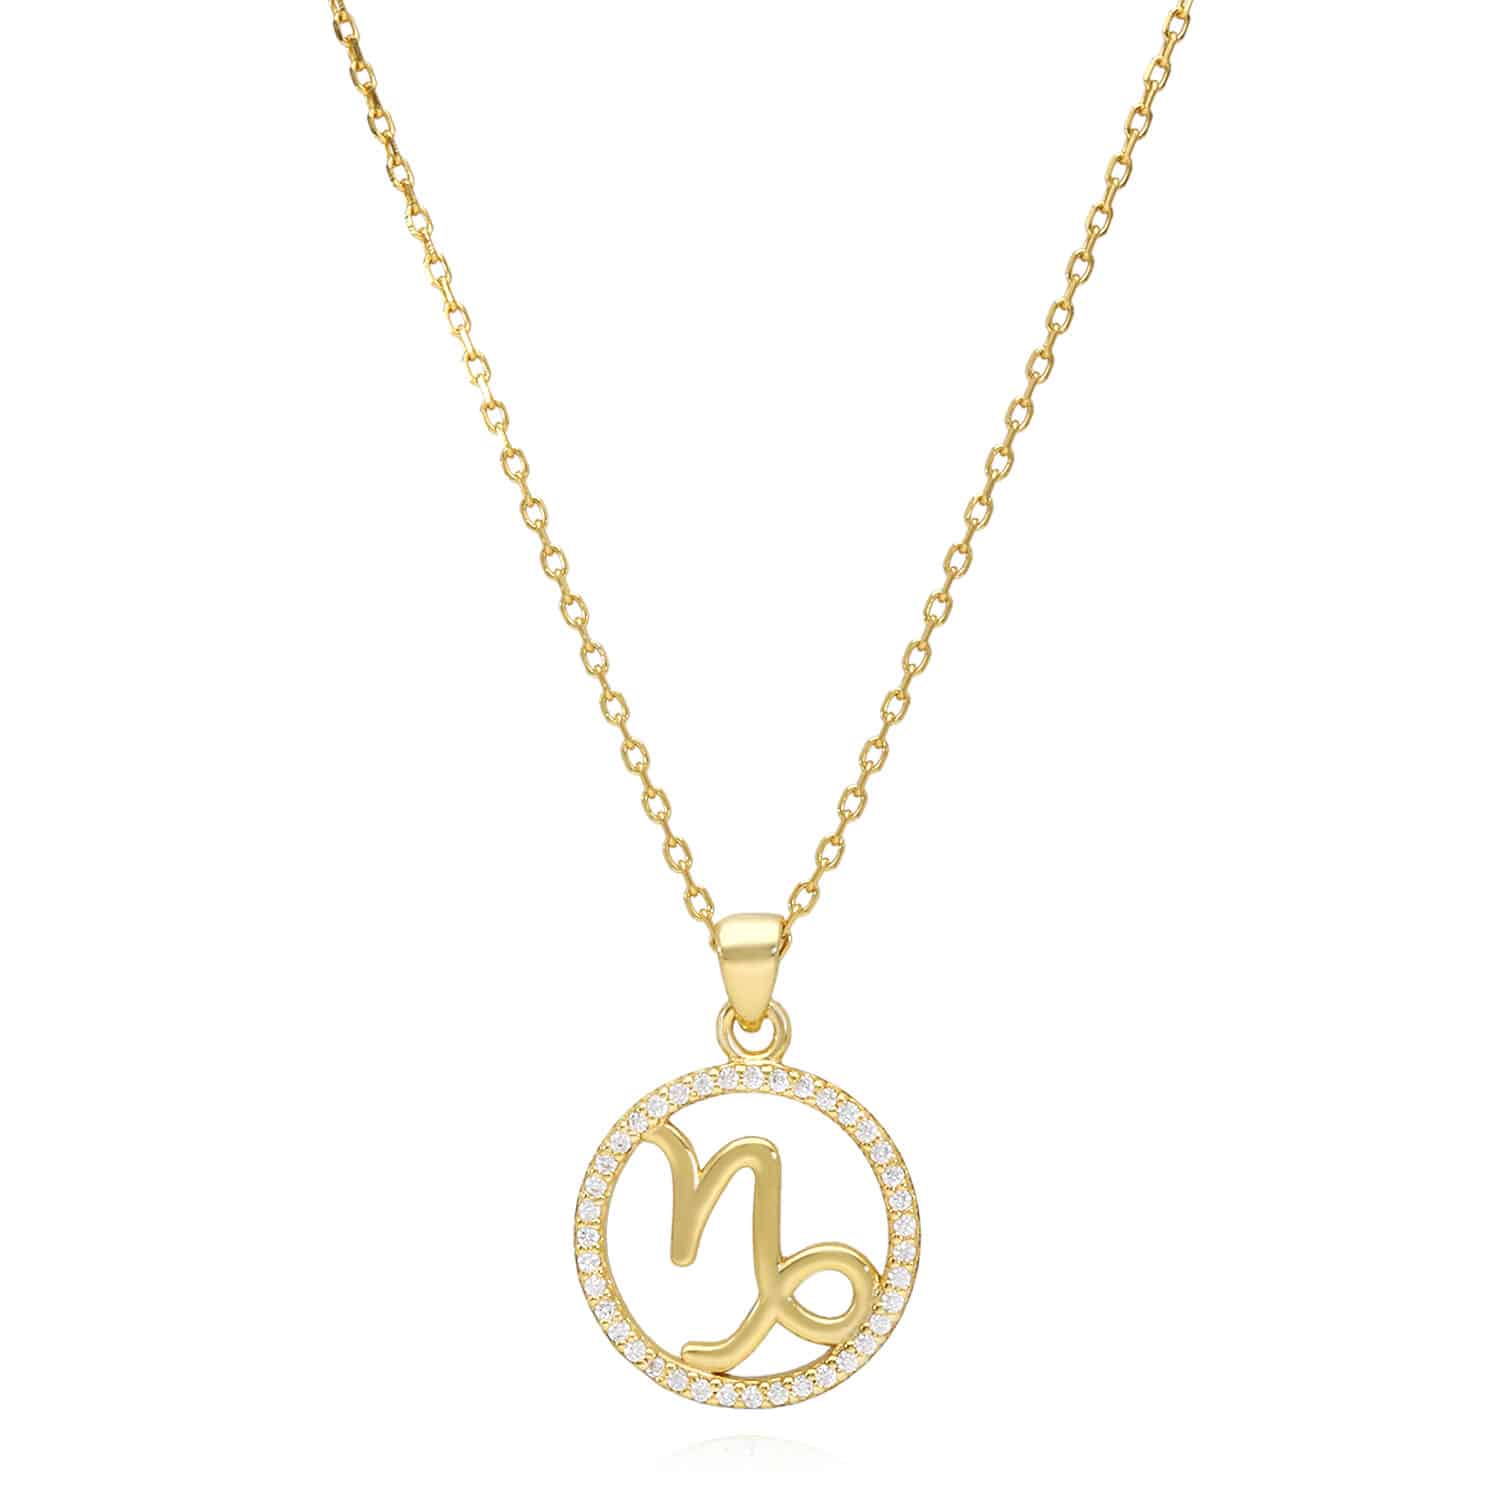 18K Gold Over Silver Simulated Diamond Zodiac Charm Pendant Necklace 16"-18" Adj - Capricorn